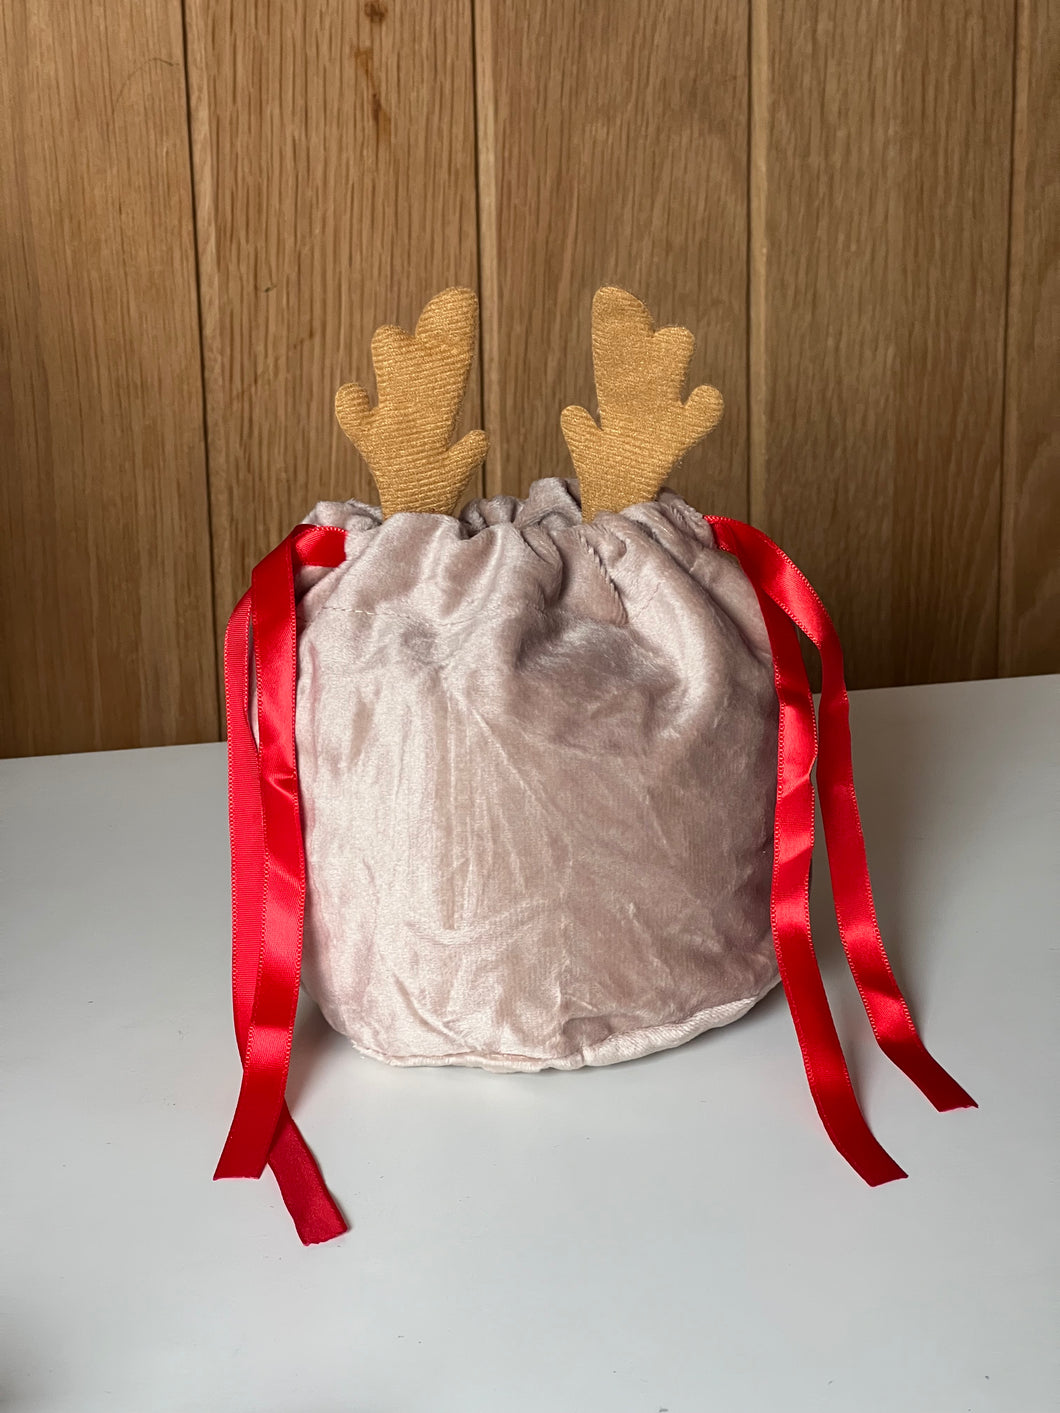 Reindeer Velvet bags with brown antlers - large size